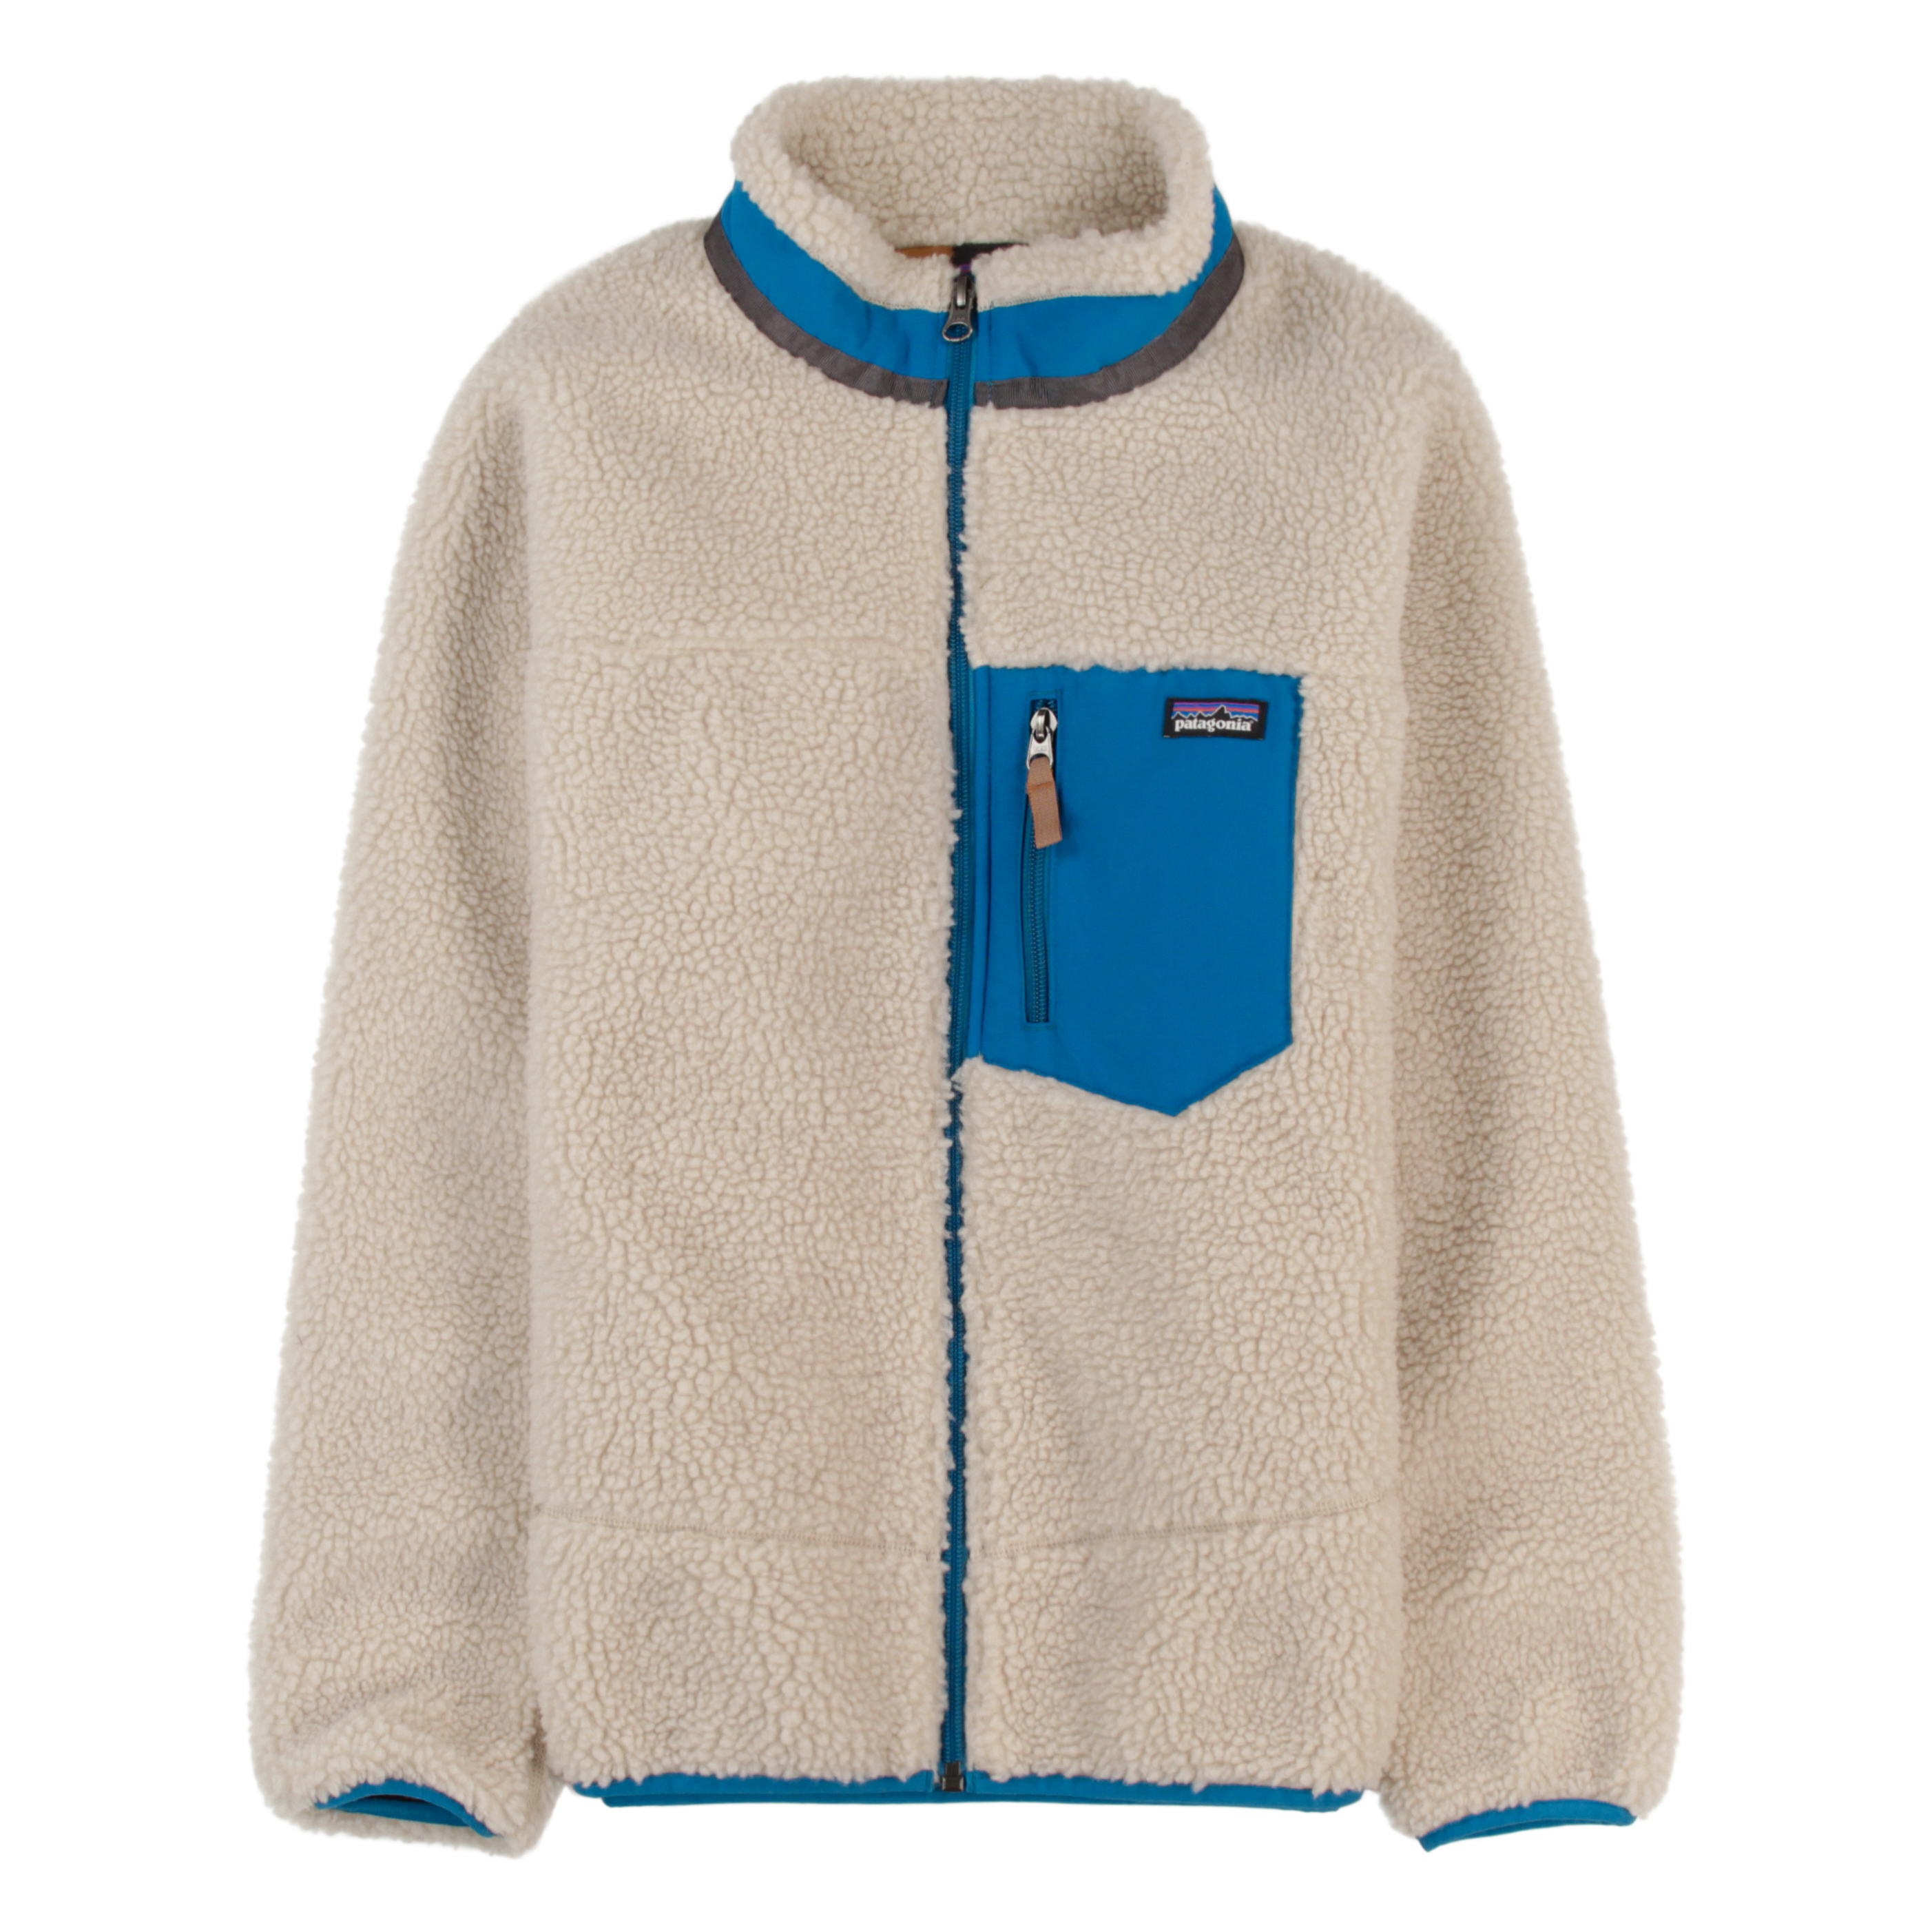 Patagonia Worn Wear Kids' Retro-X® Jacket Natural w/Balkan Blue - Used